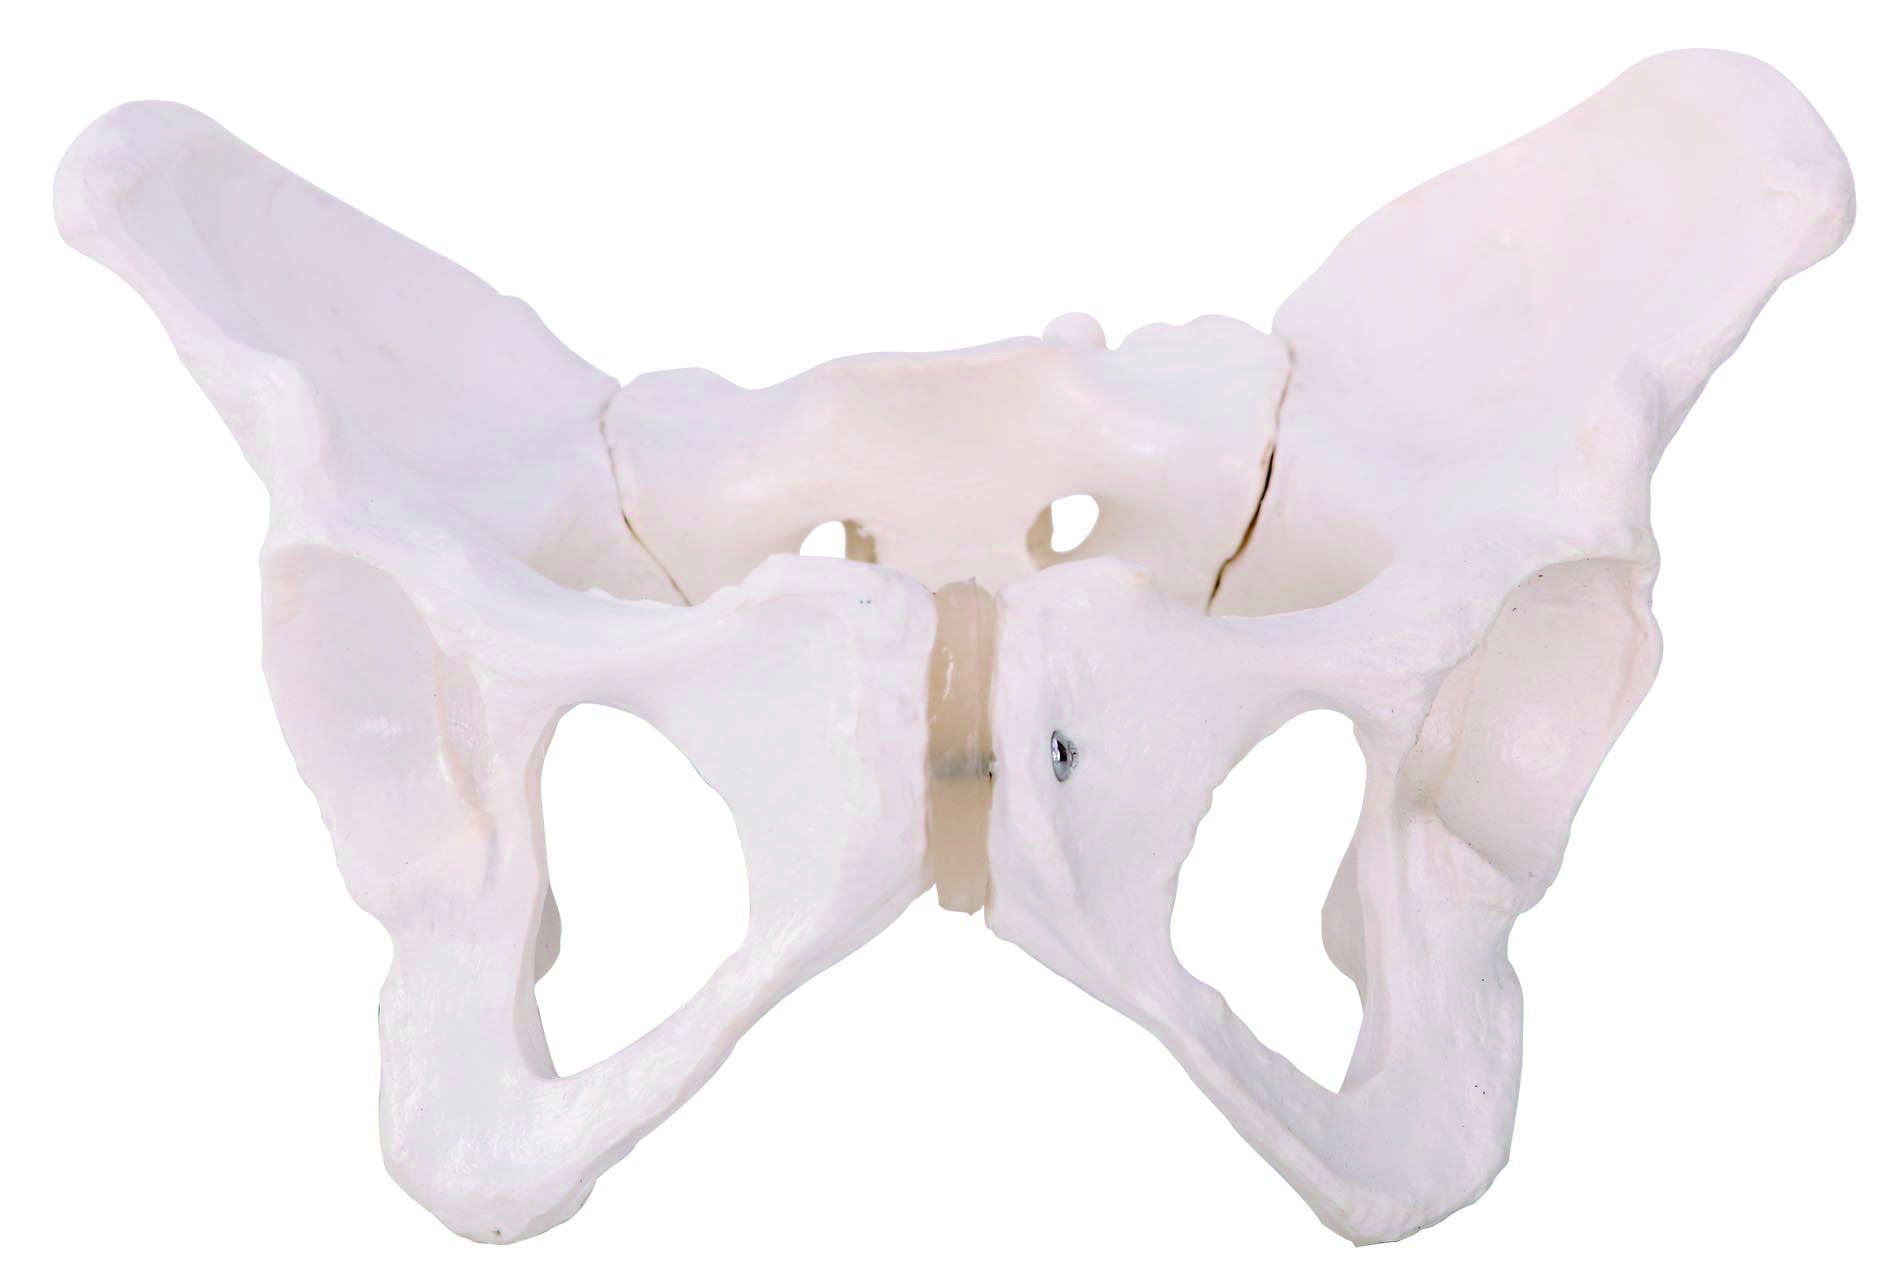 Hot Selling Medical Teaching Models Teaching Anatomical Model Adult Female Pelvis Rounded Shape